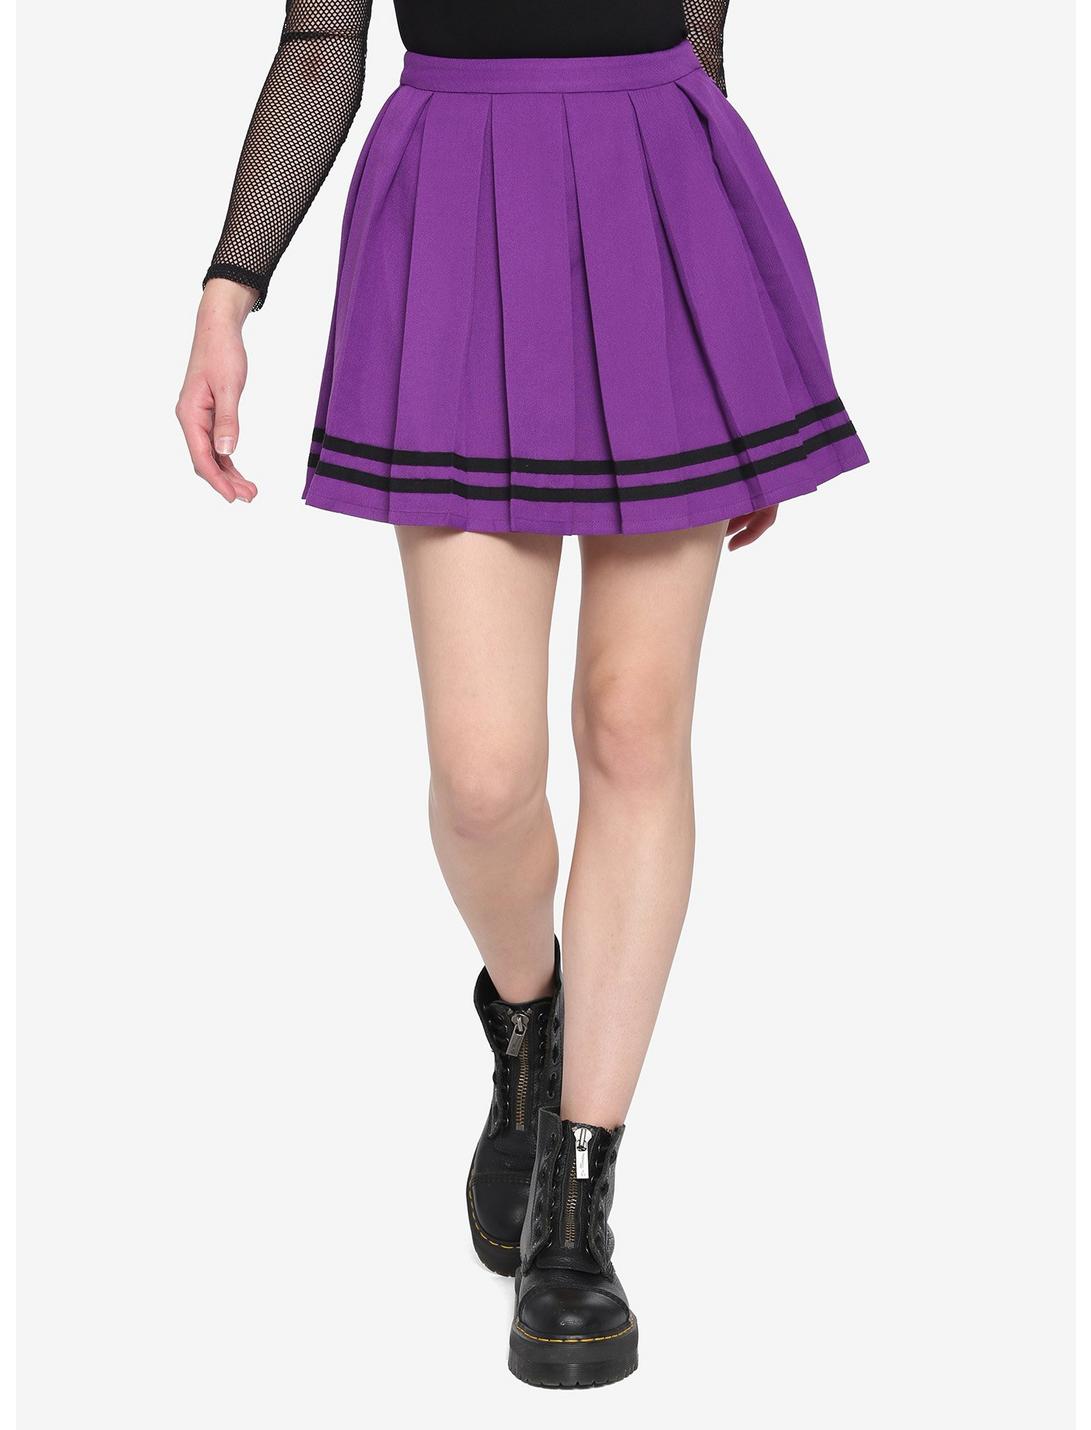 Purple & Black Cheer Skirt, PURPLE, hi-res